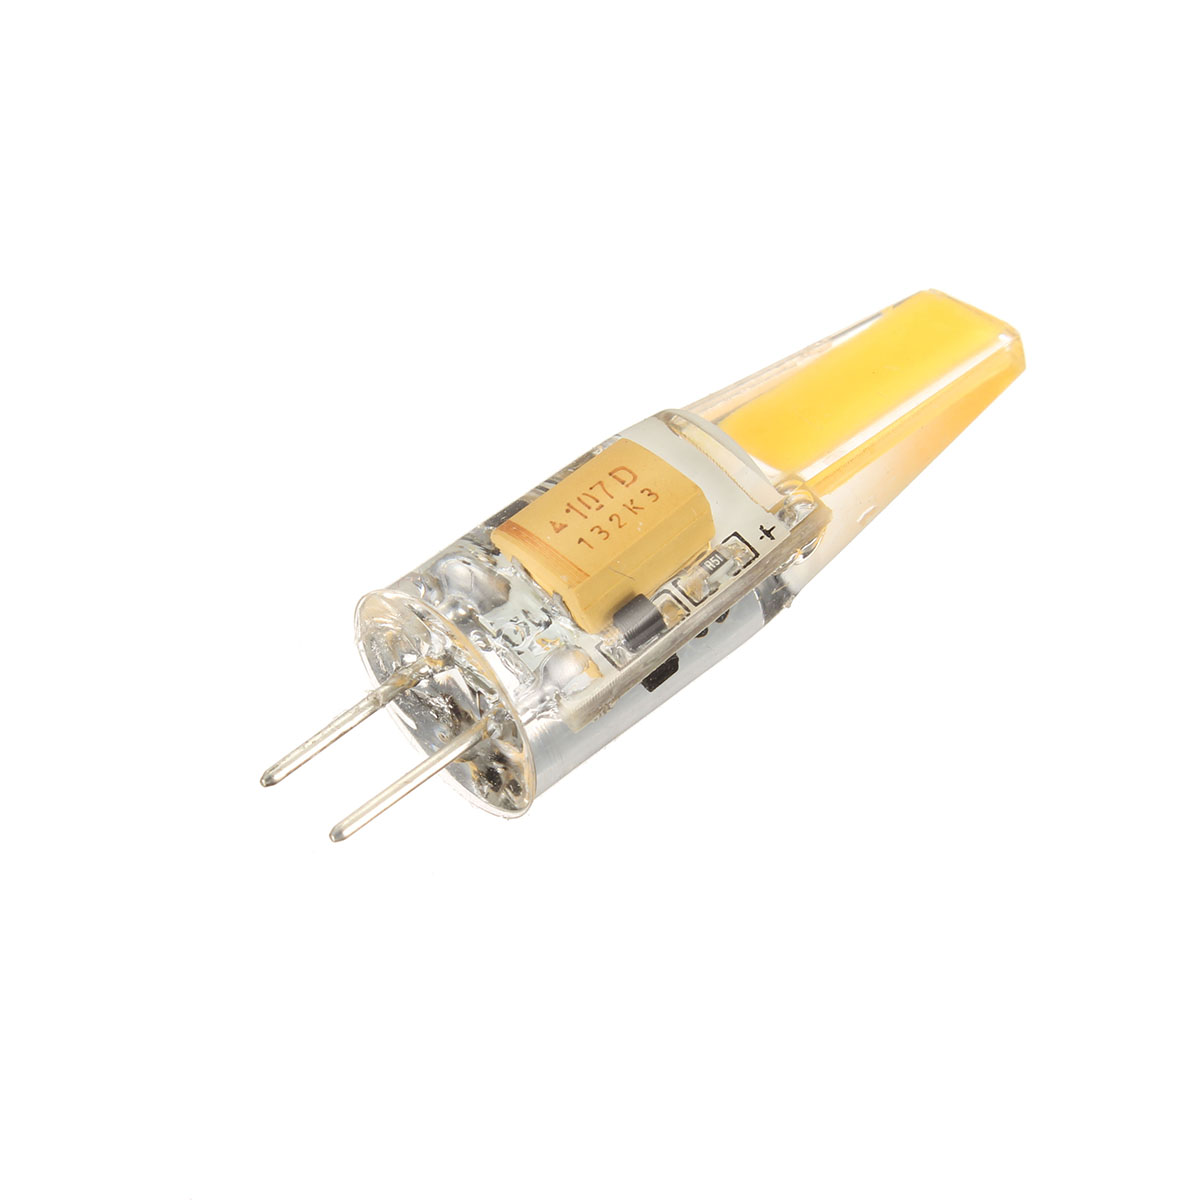 4PCS-G4-2W-Warm-White-COB-LED-Bulb-for-Chandelier-Light-Replace-Halogen-Lamp-DCAC12V-1454470-5